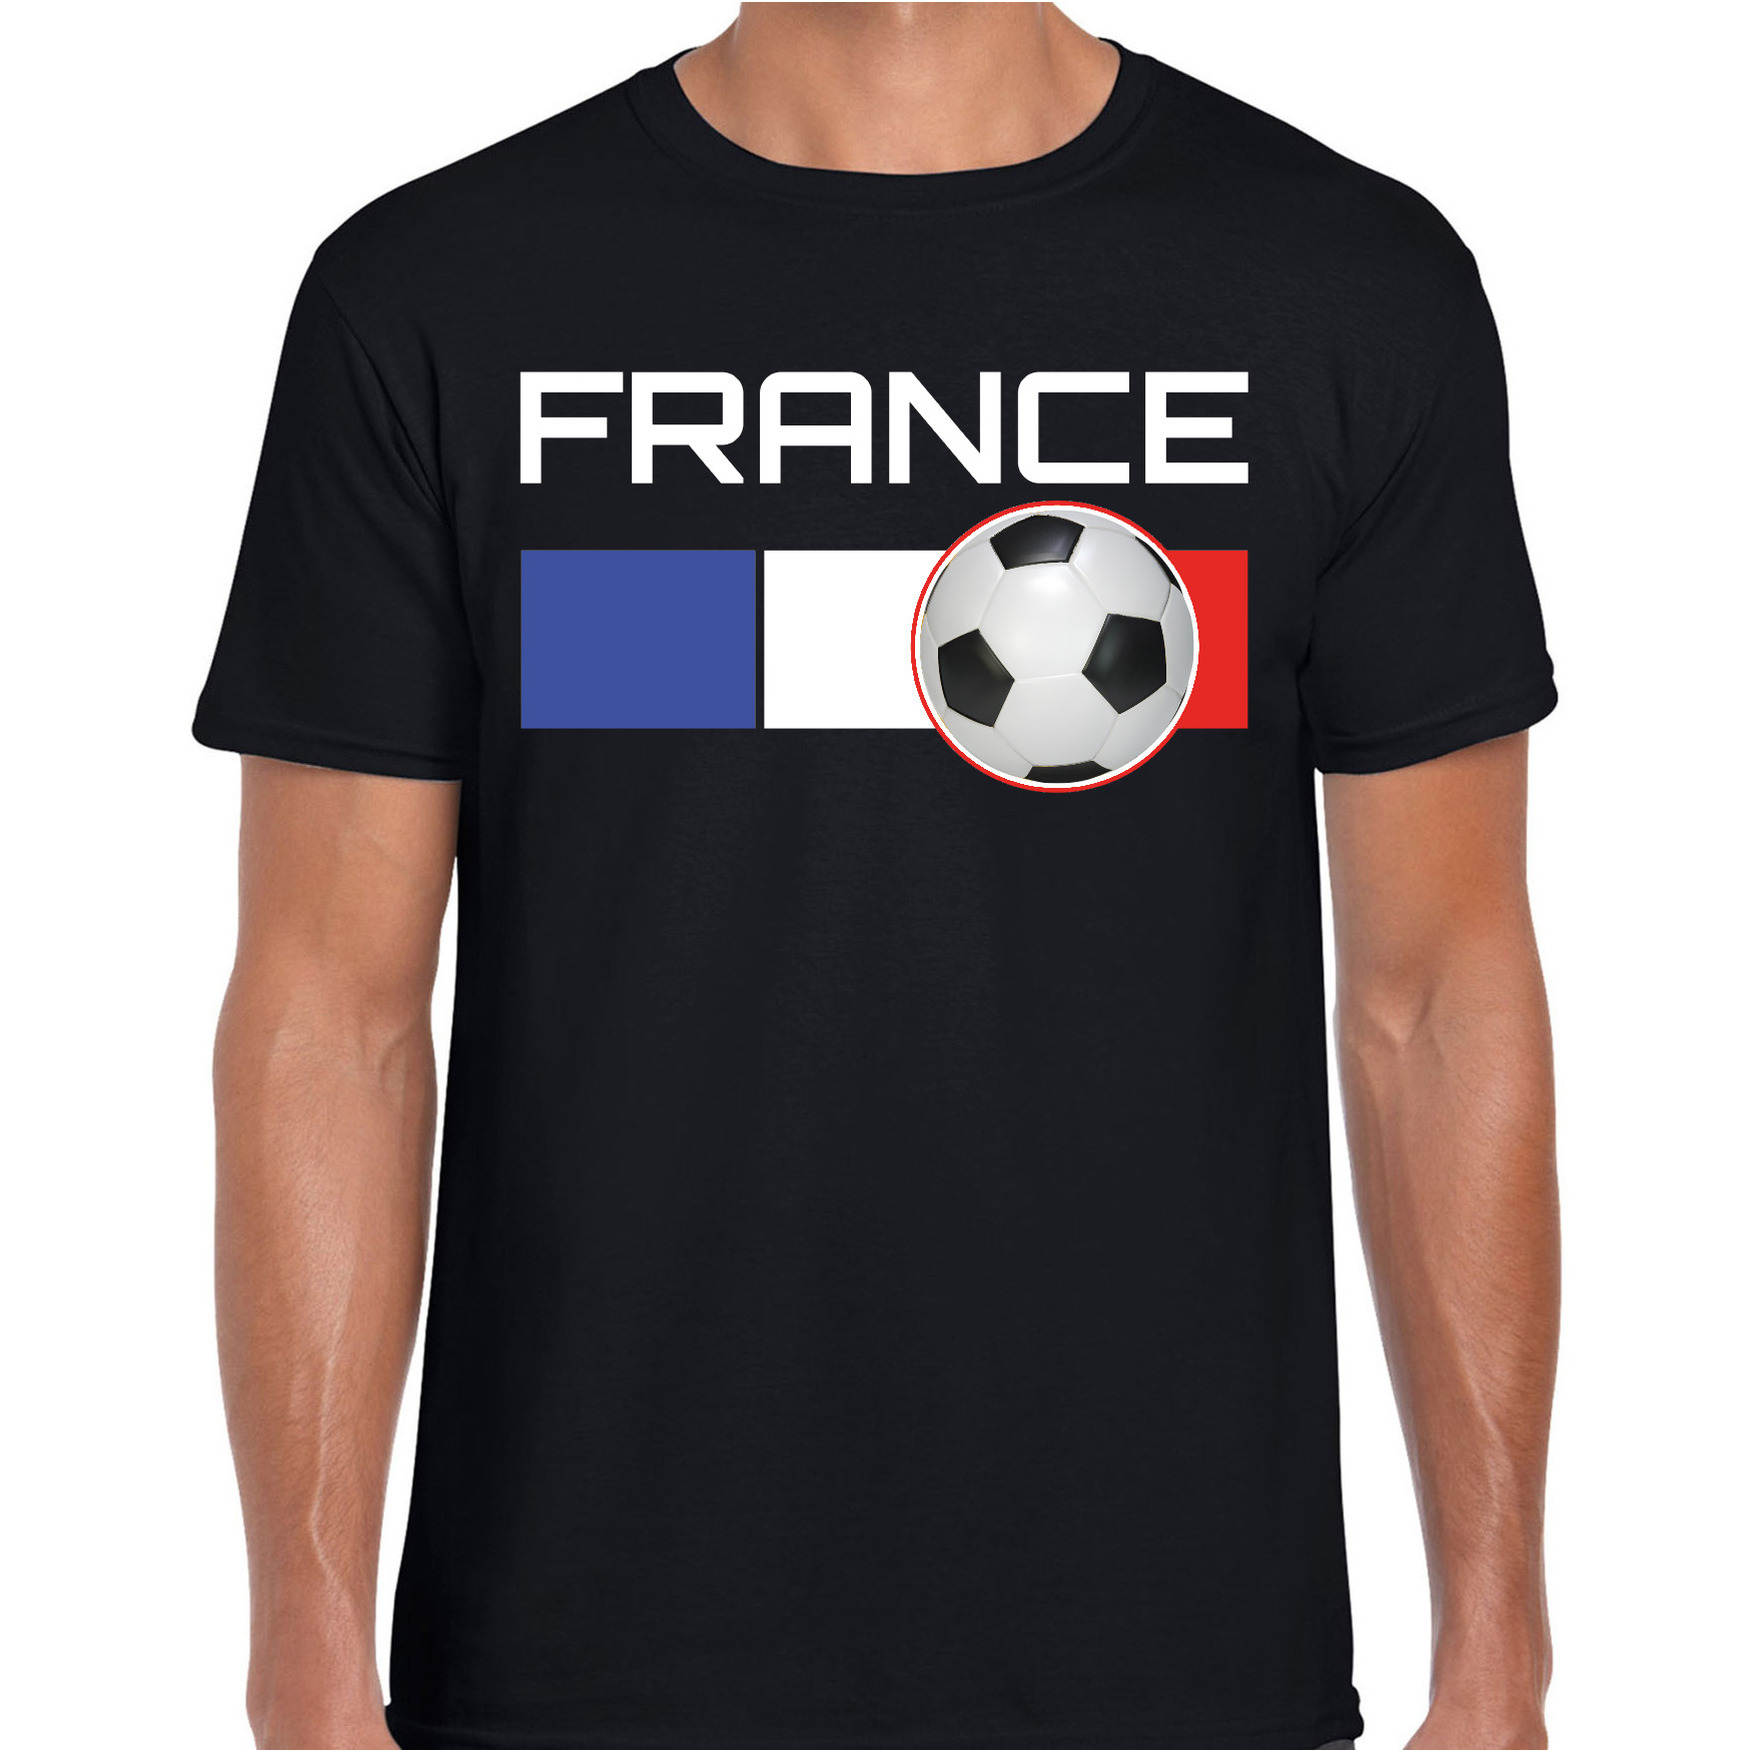 France-Frankrijk voetbal-landen t-shirt zwart heren